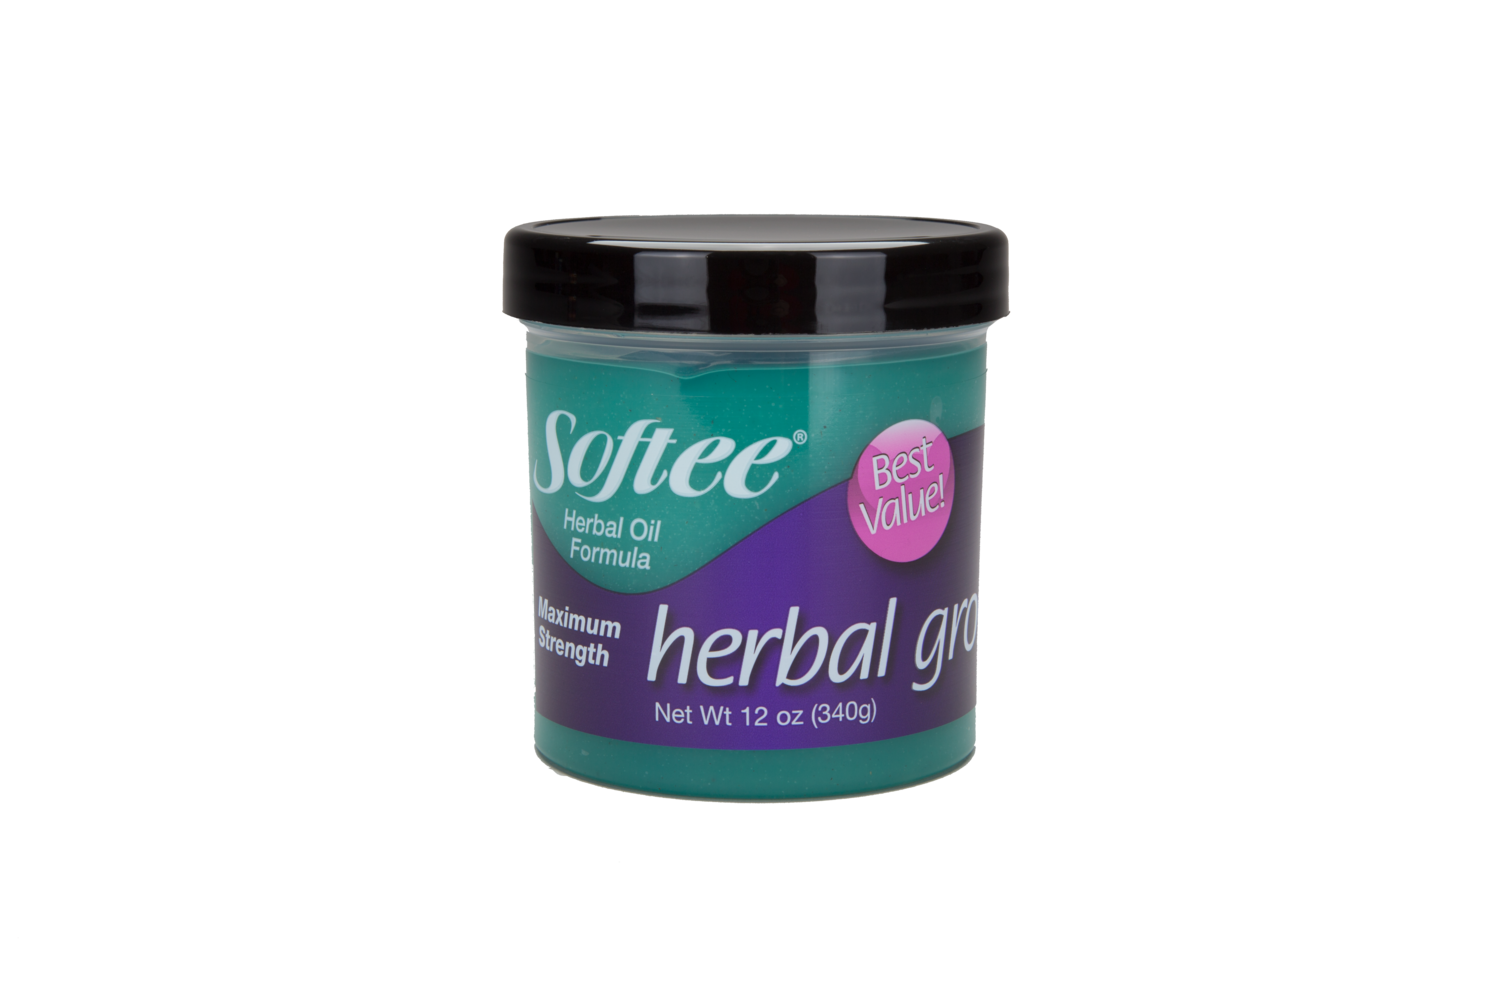 Softee Herbal Gro